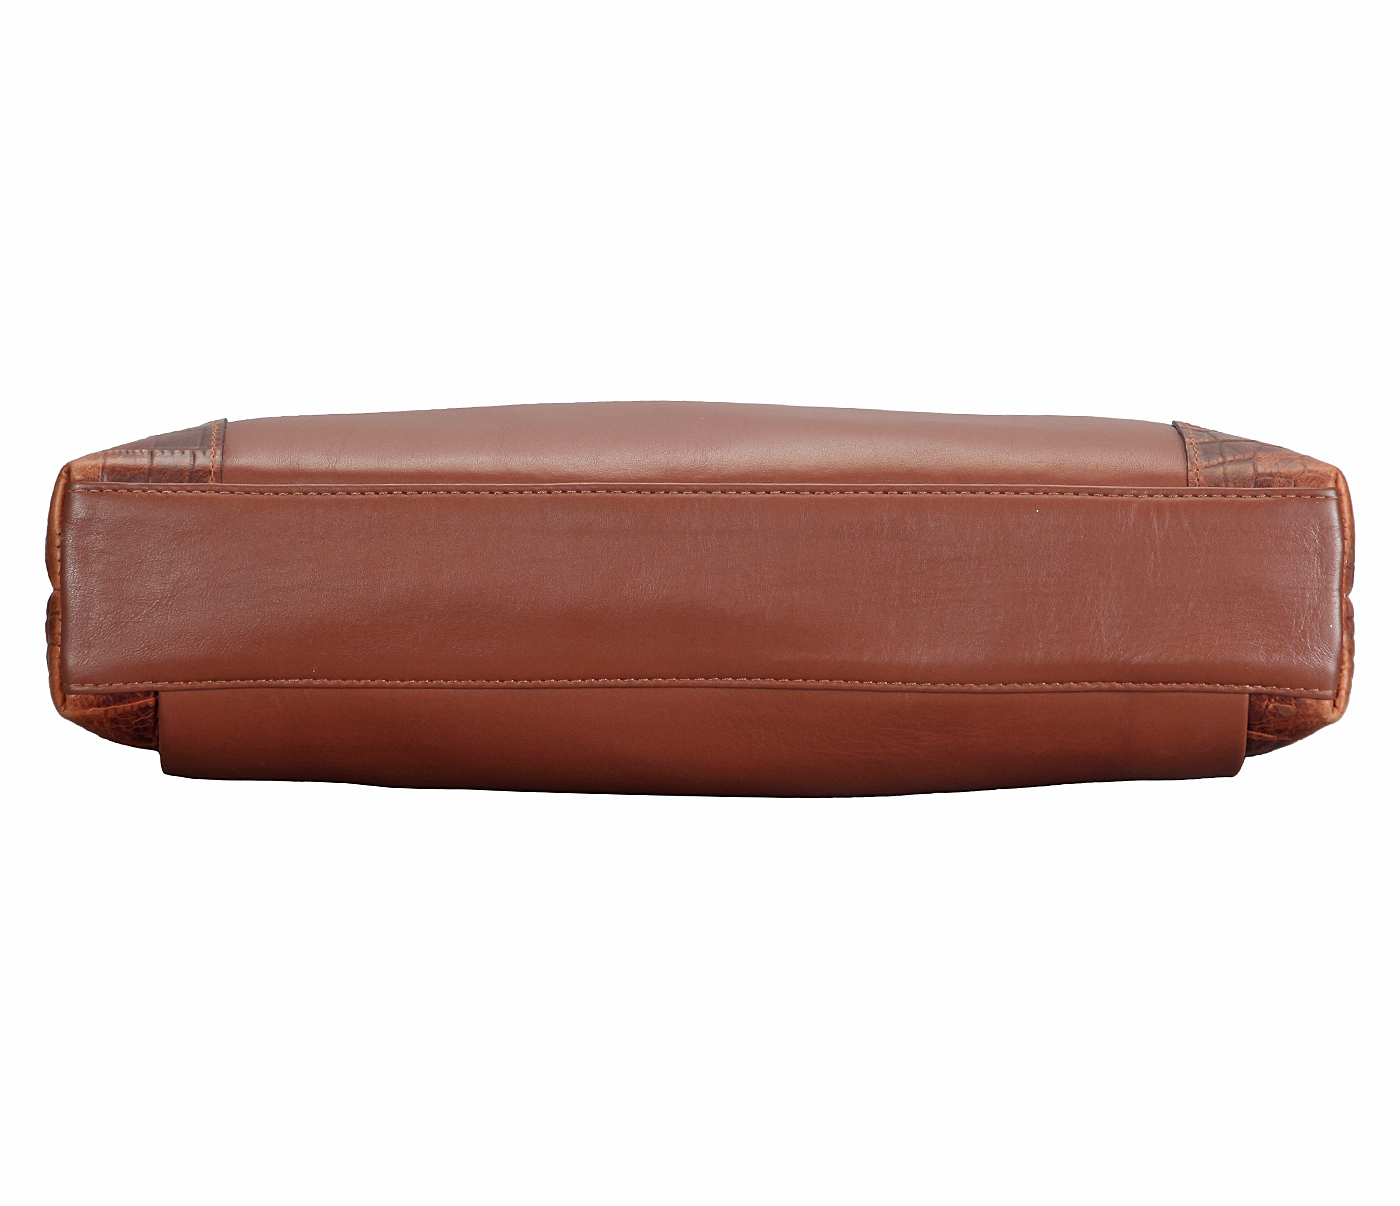 LC37-Ebner-Laptop, portfolio office executive bag in Genuine Leather - Tan/Brown